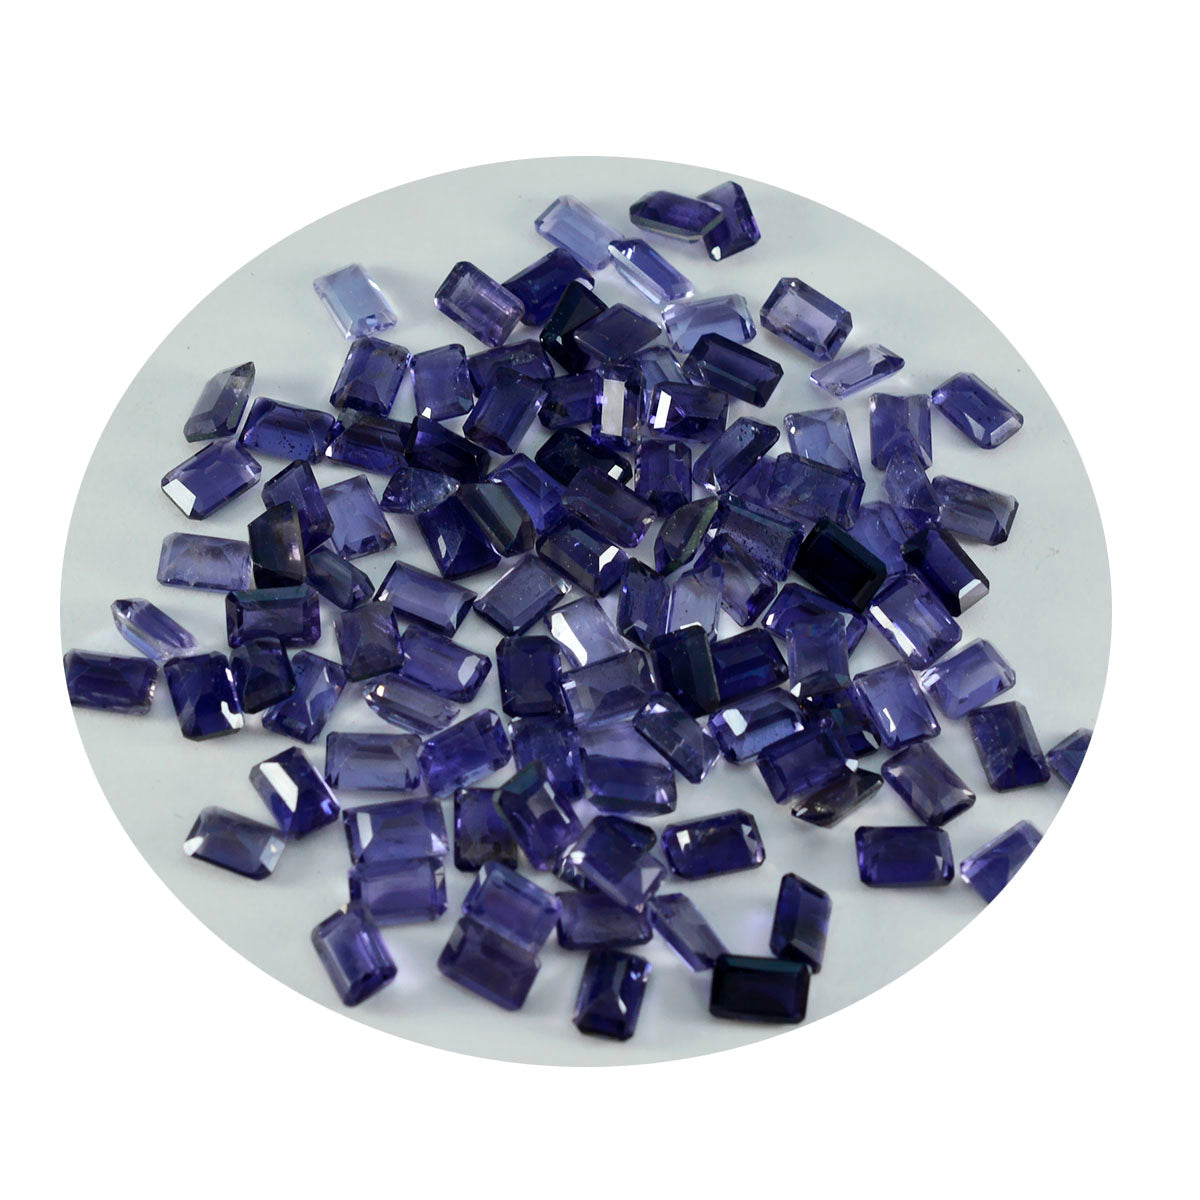 Riyogems 1PC blauwe ioliet gefacetteerde 3x5 mm achthoekige vorm edelstenen van uitstekende kwaliteit